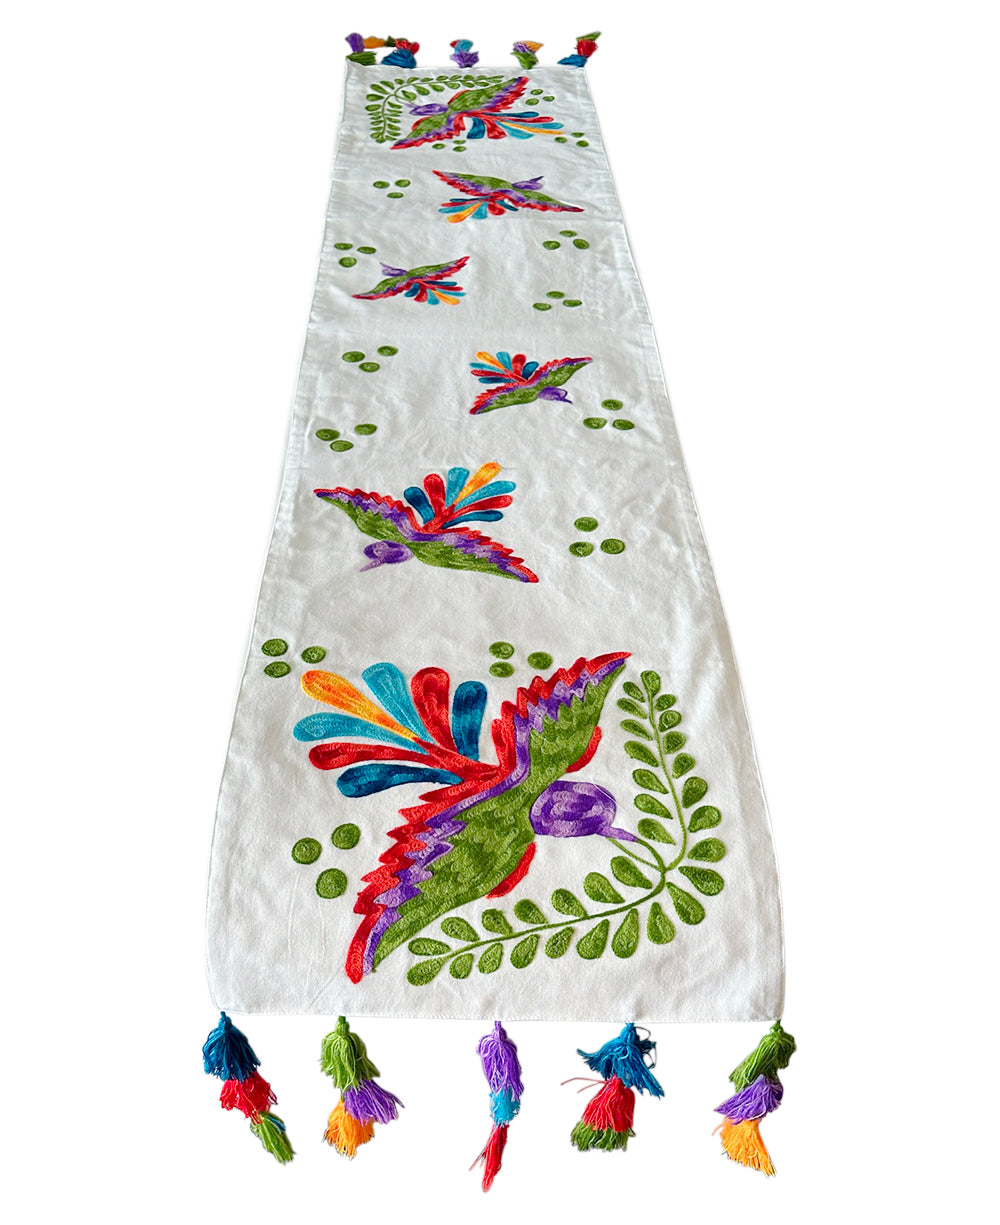 Vivid Bird Design Embroidered Suzani Cotton Table Runner With Tassels